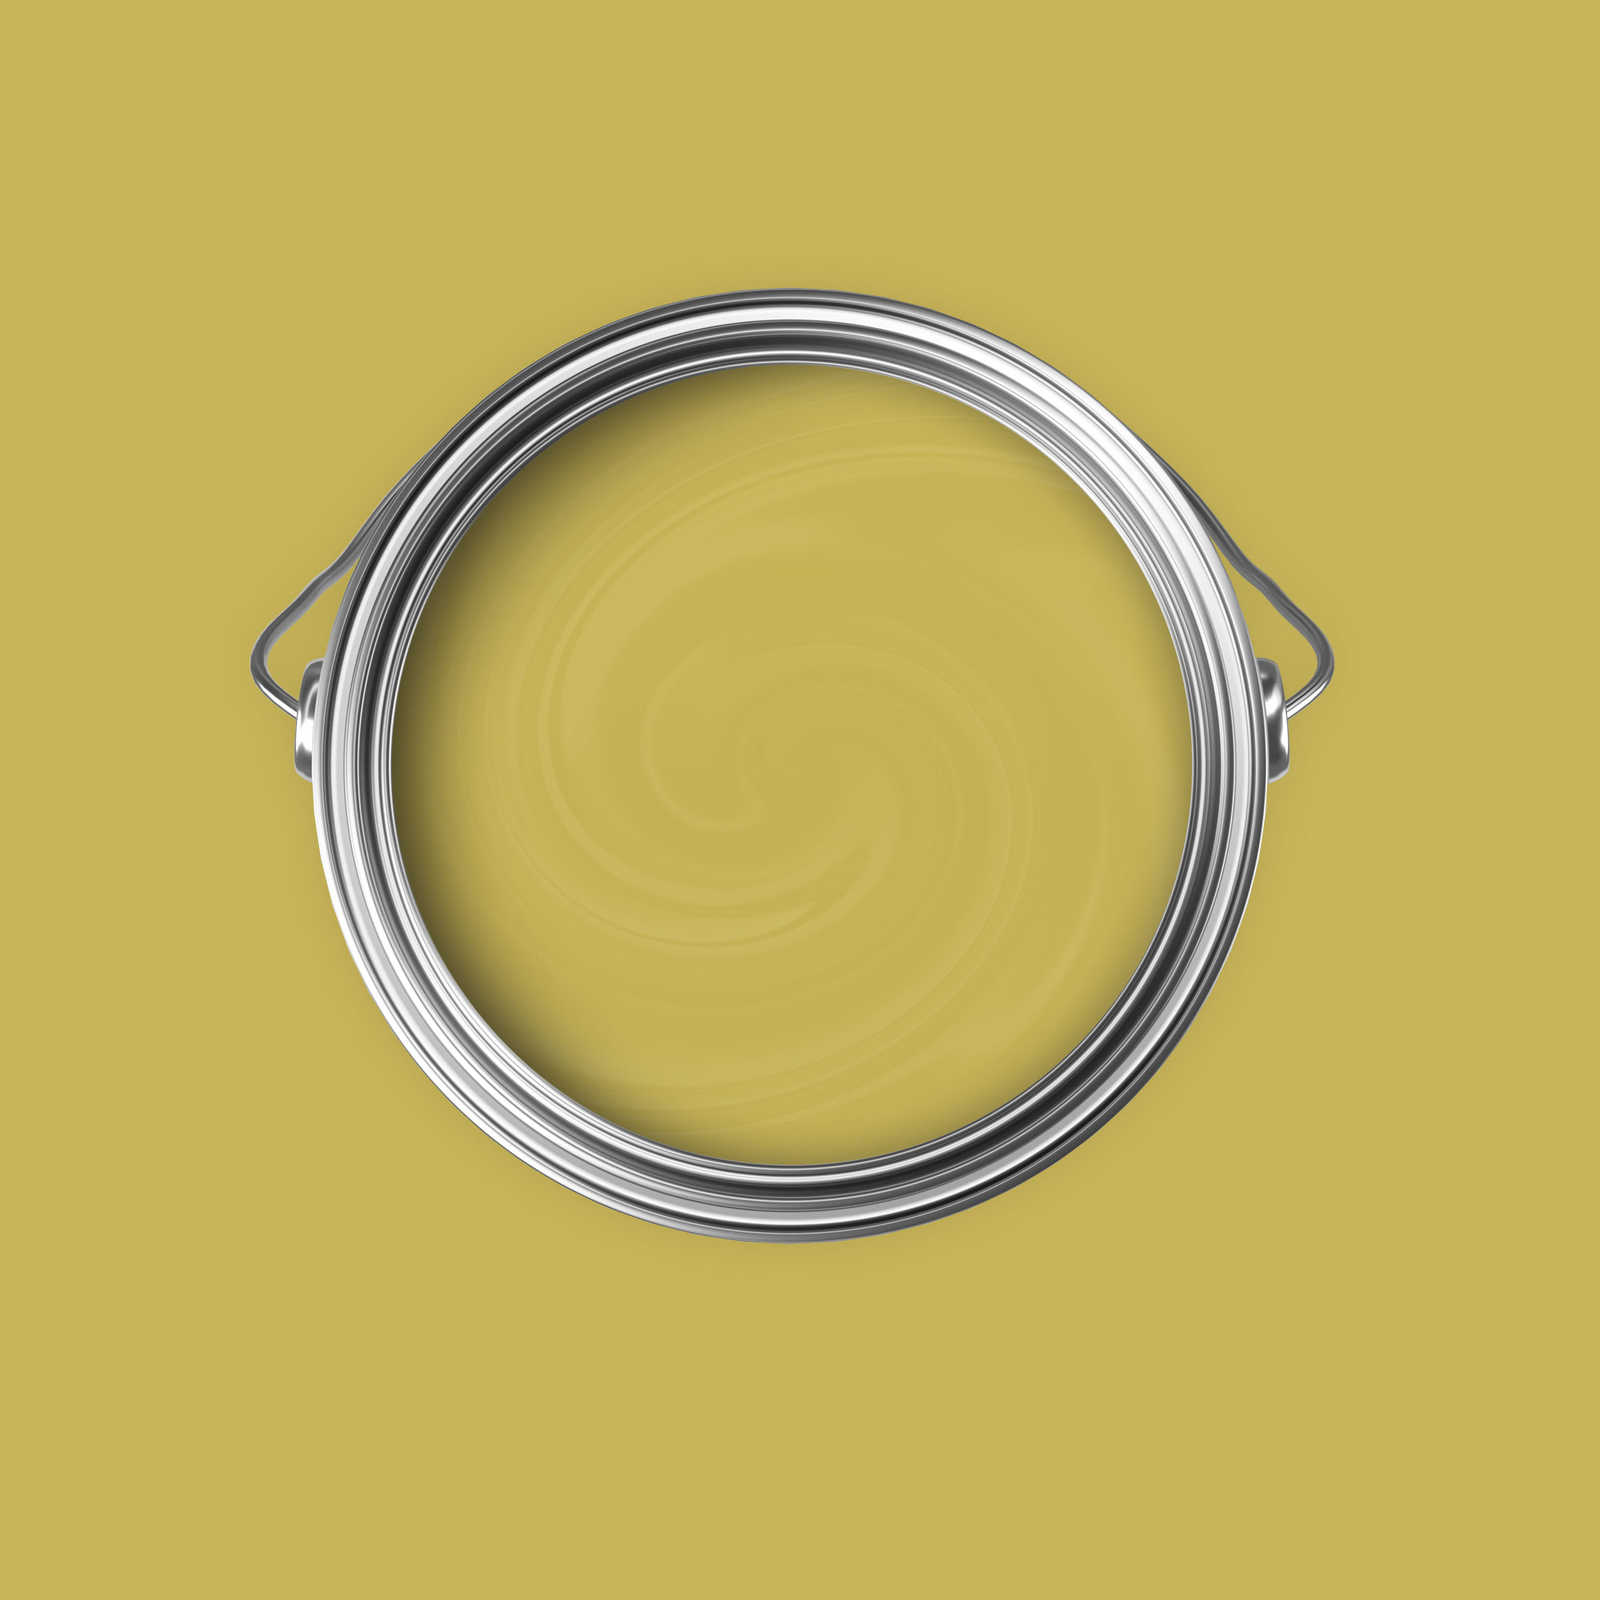             Premium Muurverf Radiant Pistachio »Lucky Lime« NW603 – 5 liter
        